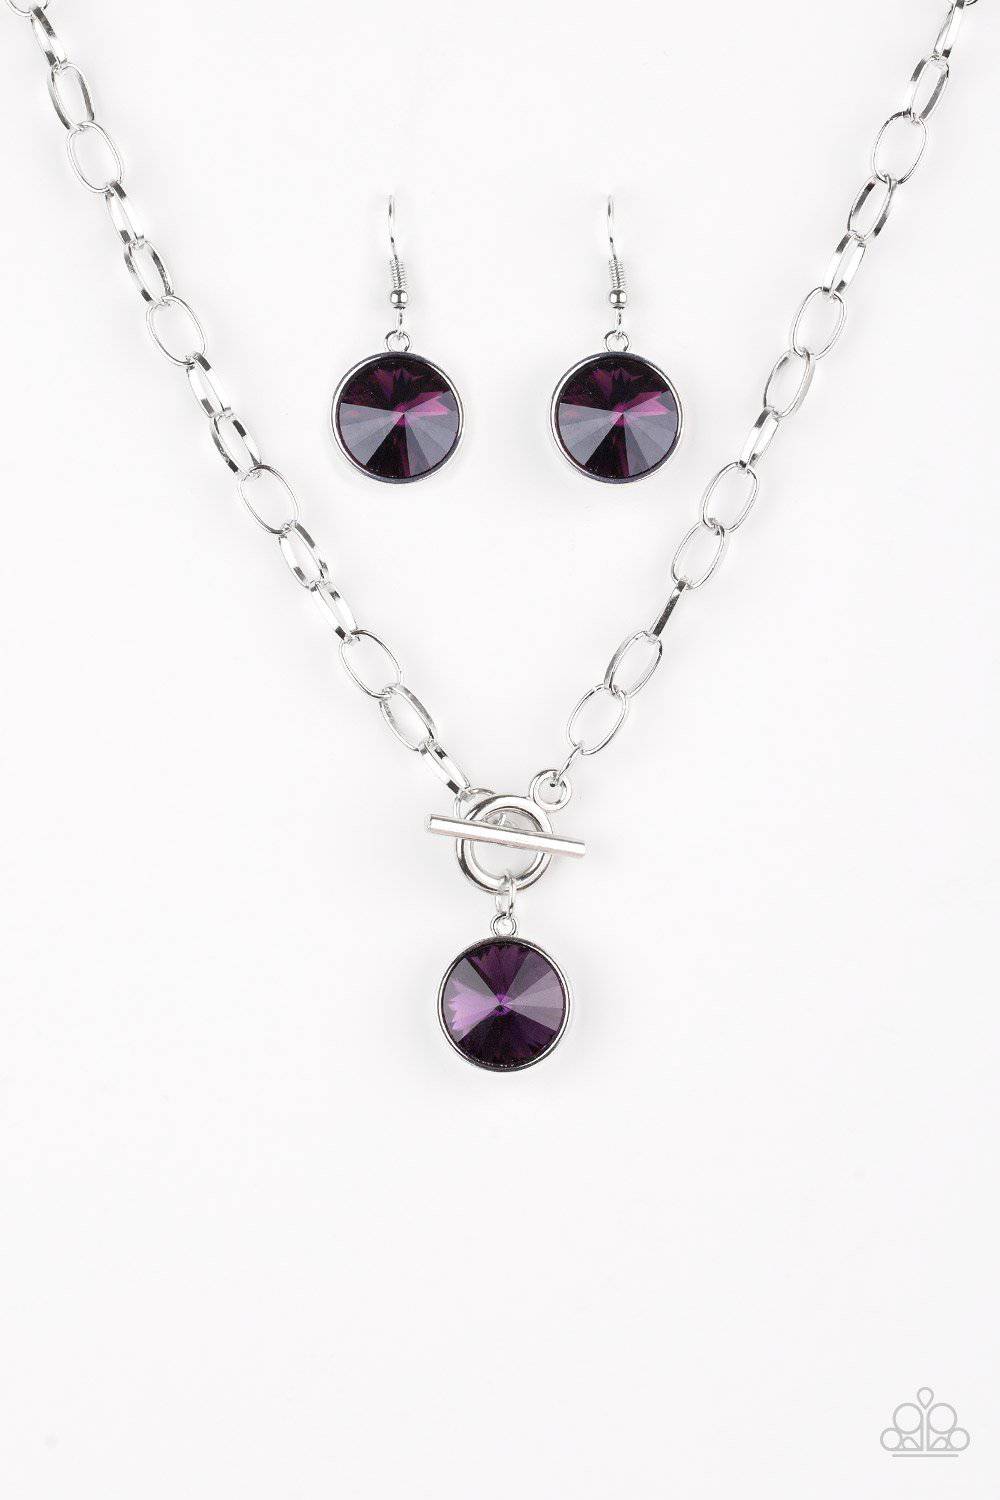 She Sparkles On - Purple Gem Necklace - Paparazzi Accessories - GlaMarous Titi Jewels